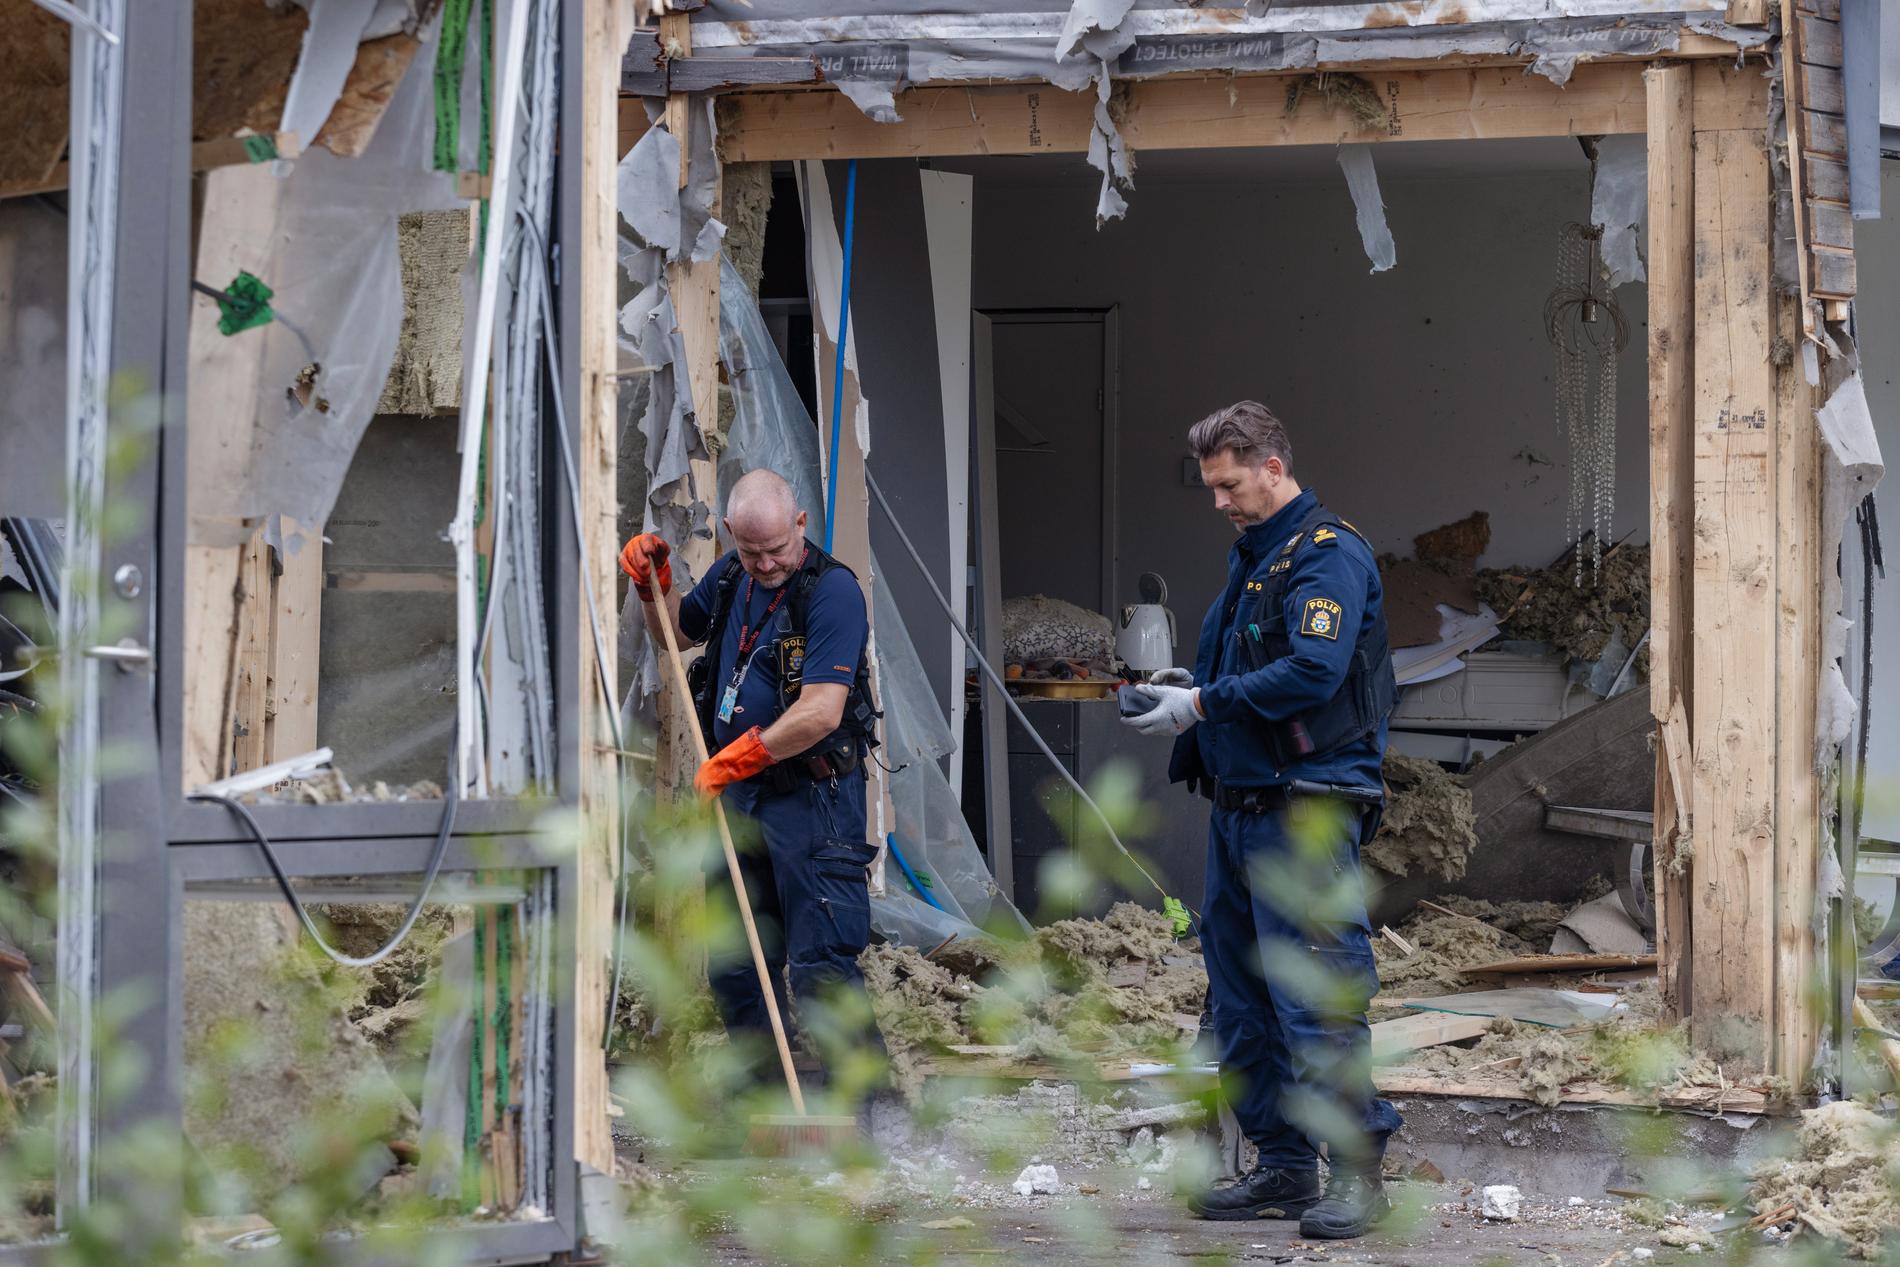 Title: “Swedish Crime Scene Technicians Investigate Bomb Explosion in Uppsala Neighborhood”